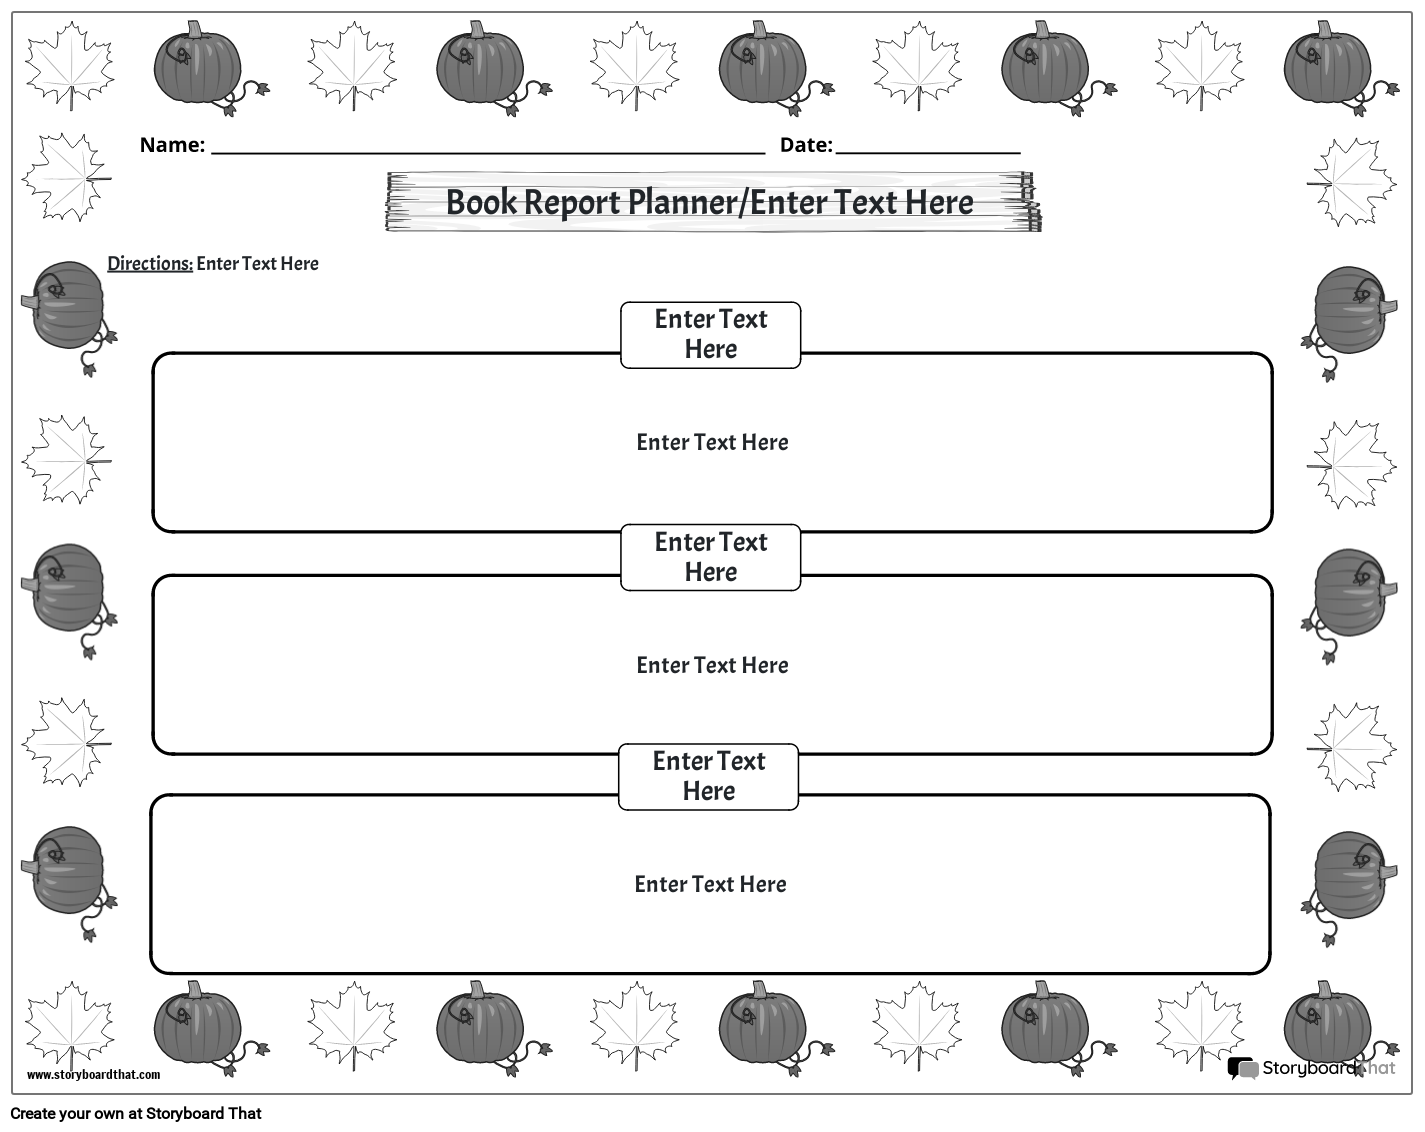 book-report-template-book-report-maker-storyboardthat